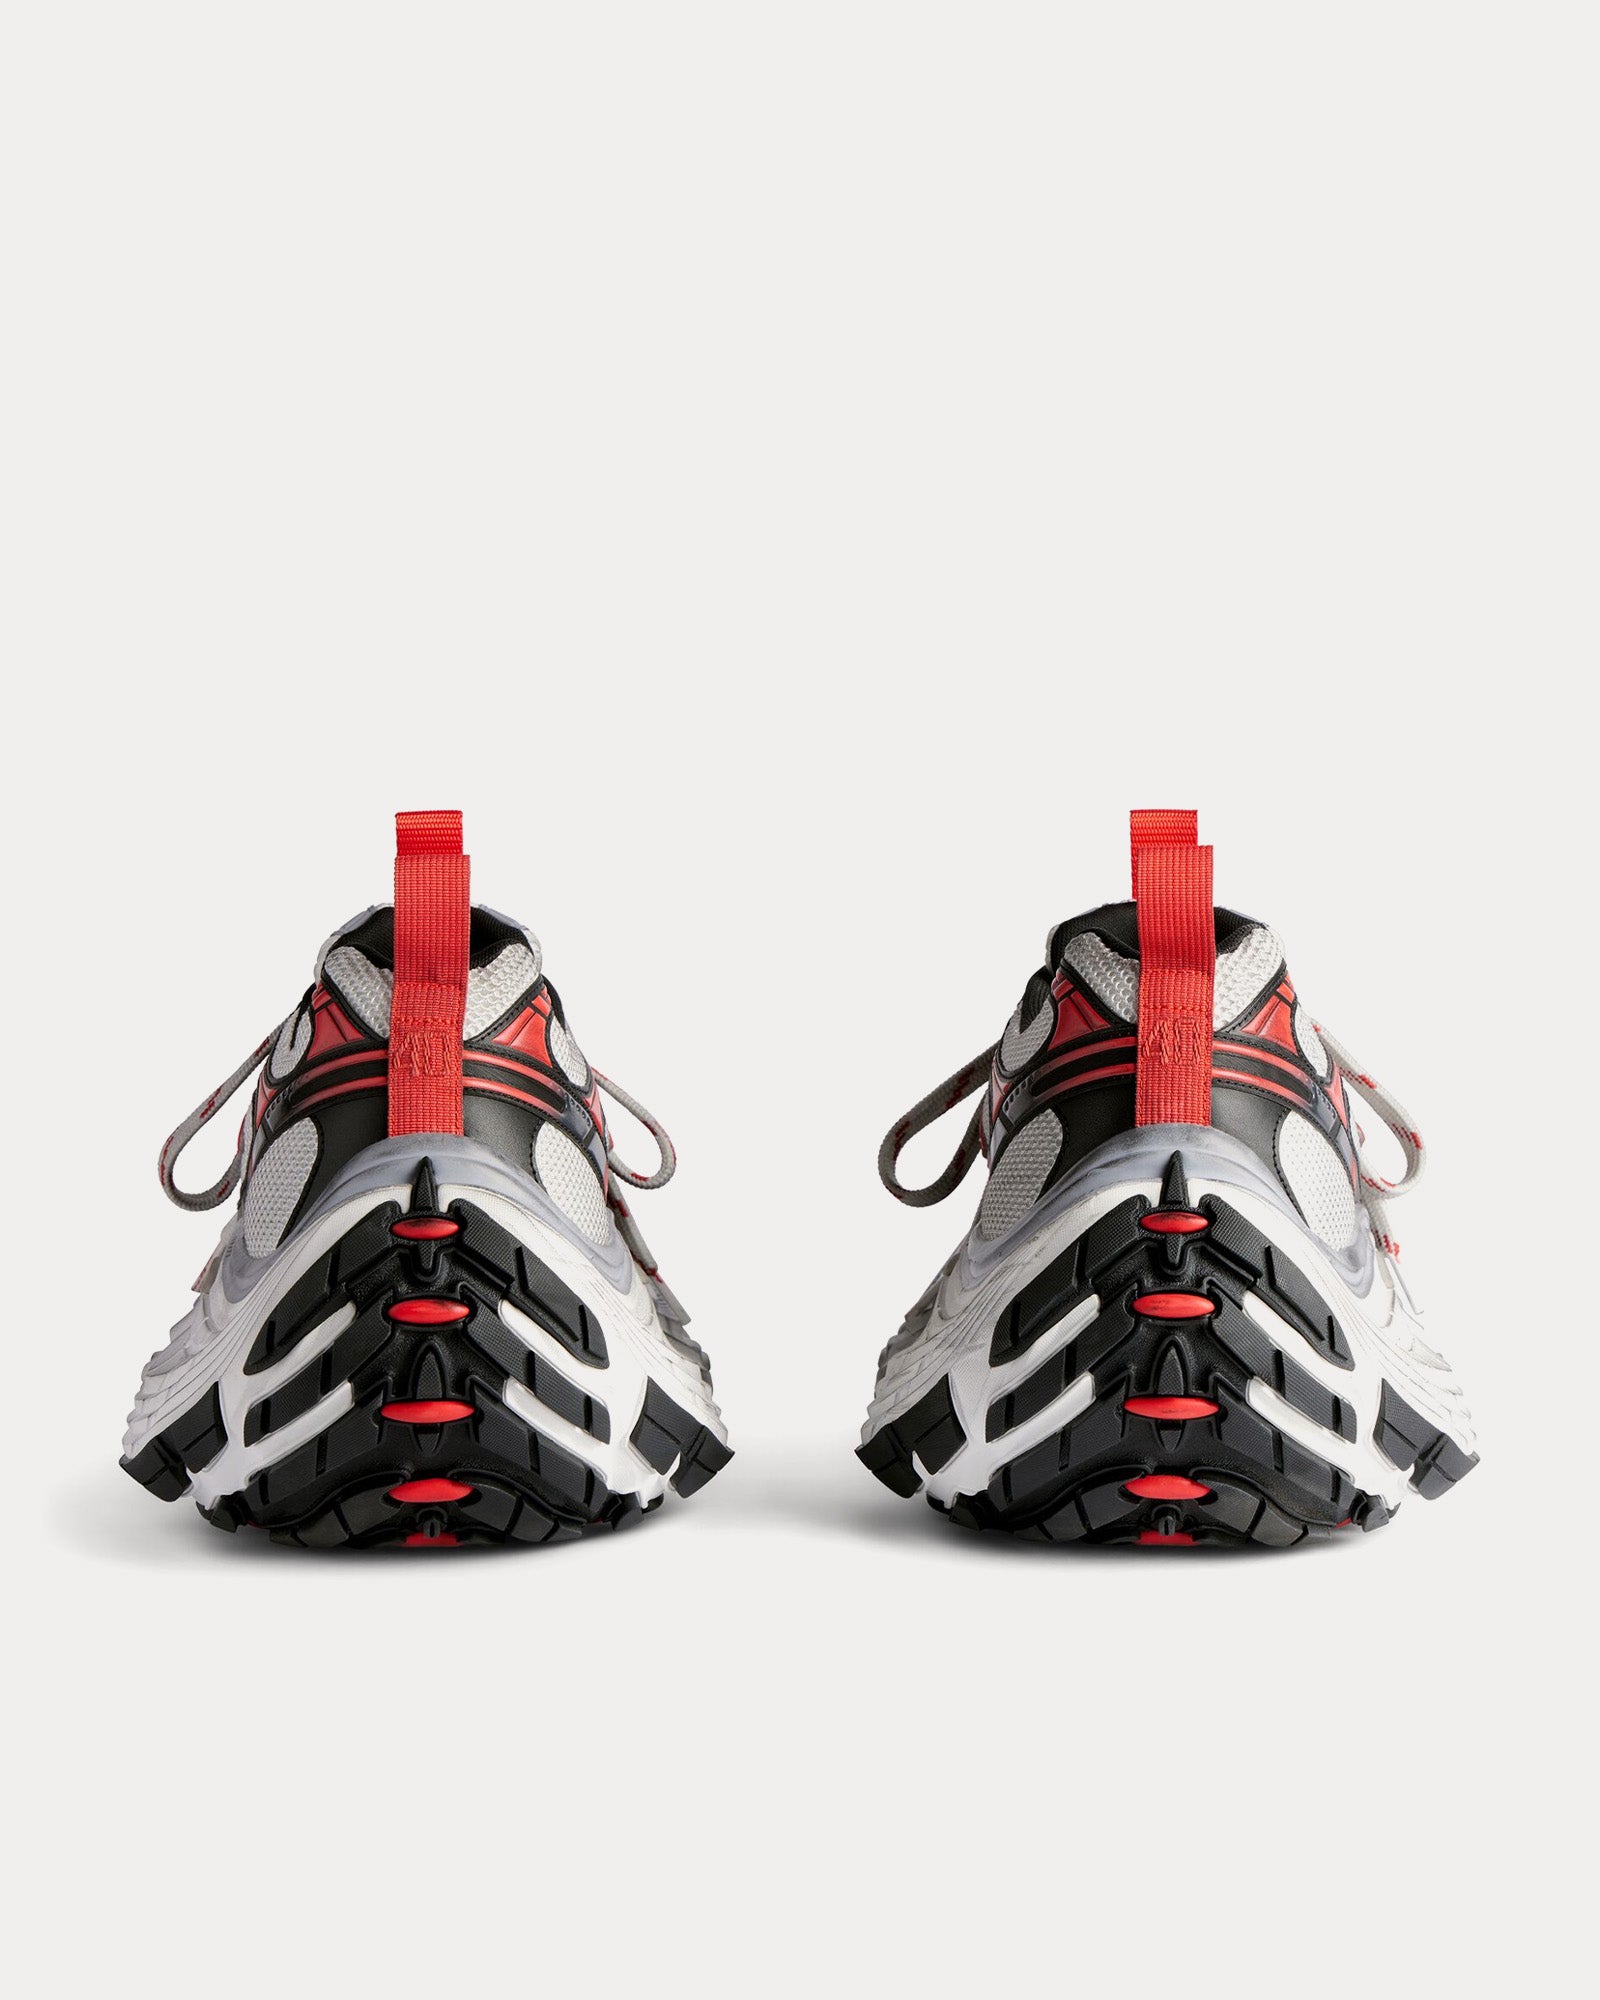 Balenciaga - 10XL Mesh, TPU & Rubber Grey / White / Red Low Top Sneakers